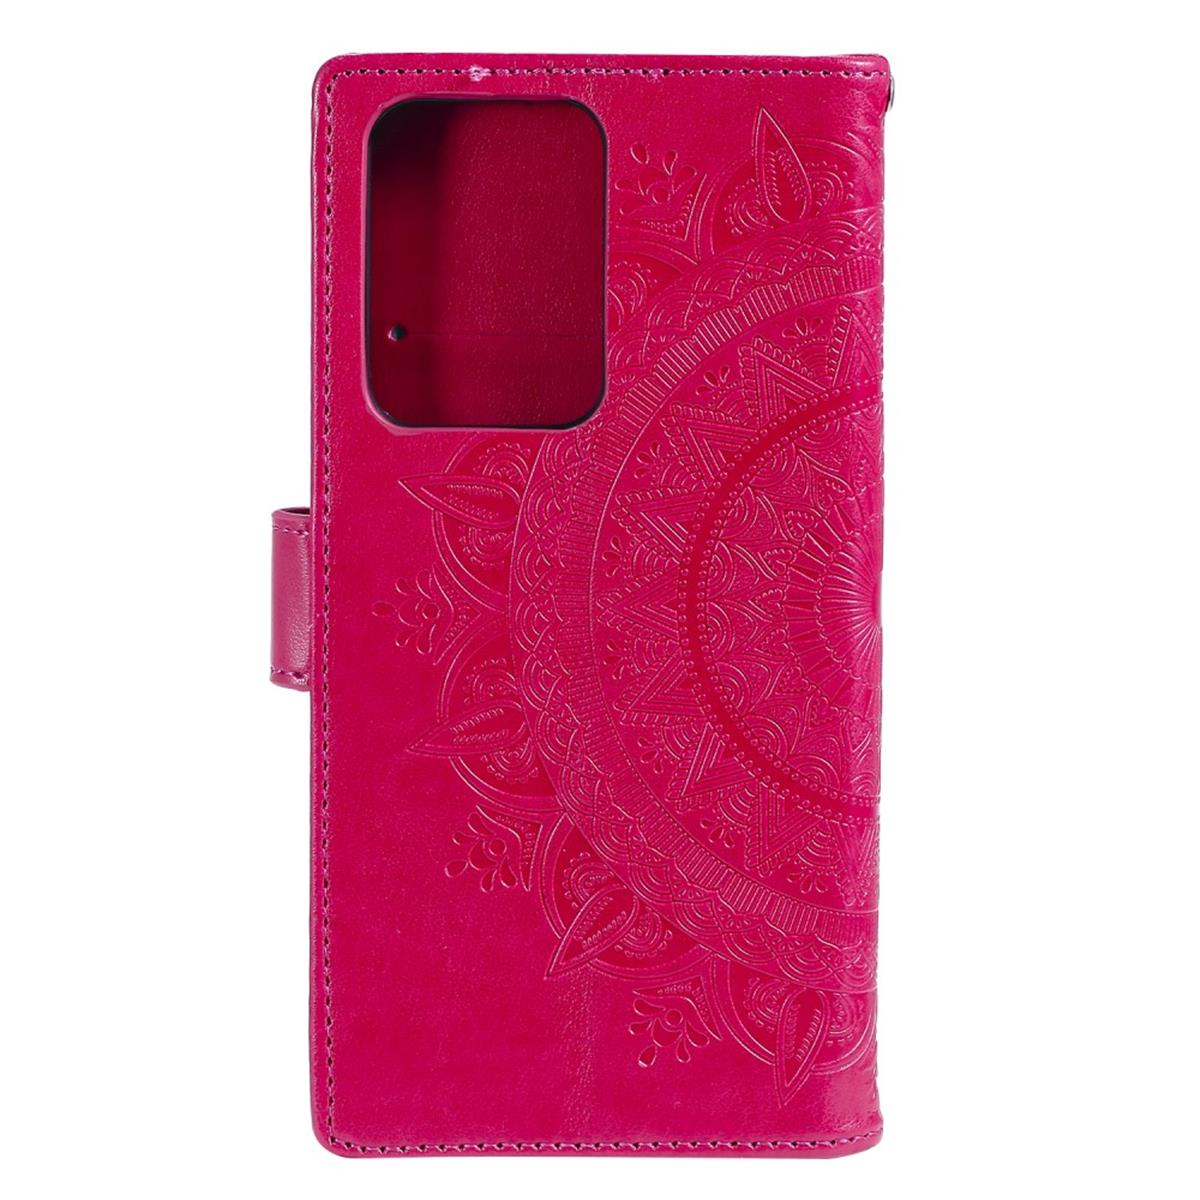 Hülle für Samsung Galaxy S20 Ultra Handyhülle Flip Case Schutzhülle Mandala Pink